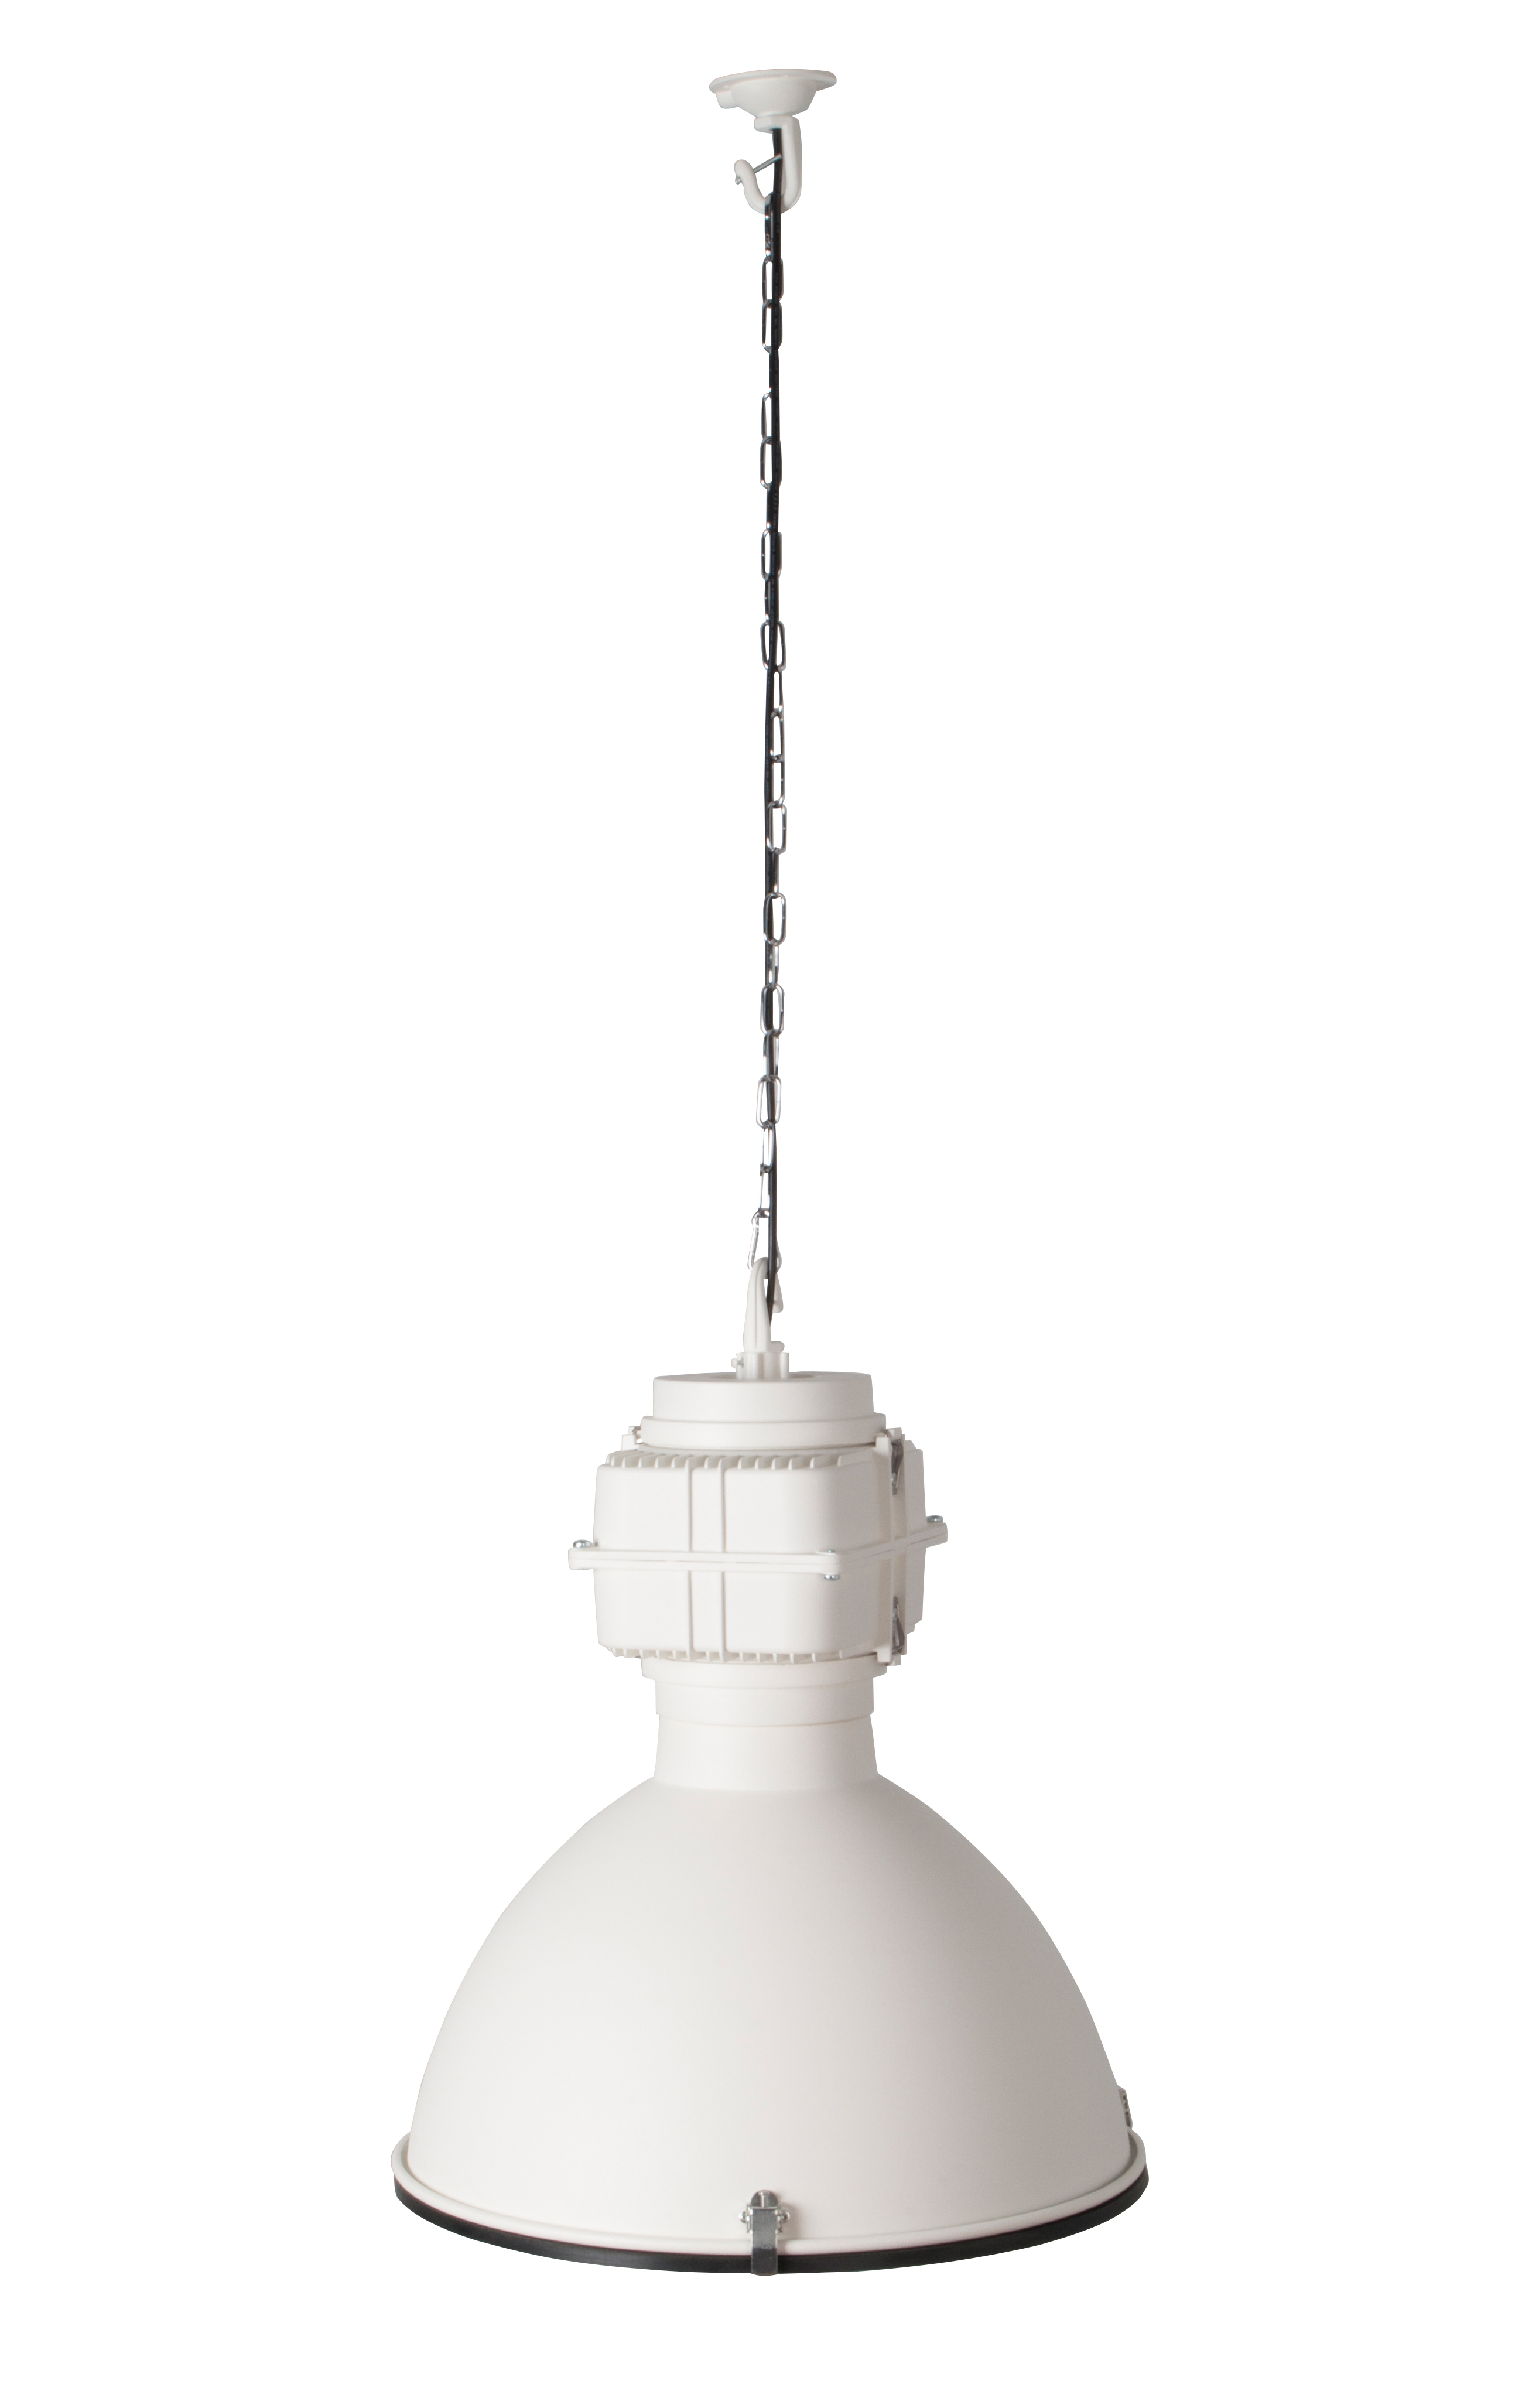 Светильник подвесной PENDANT LAMP VIC INDUSTRY WHITE MATTE Zuiver НИДЕРЛАНДЫ